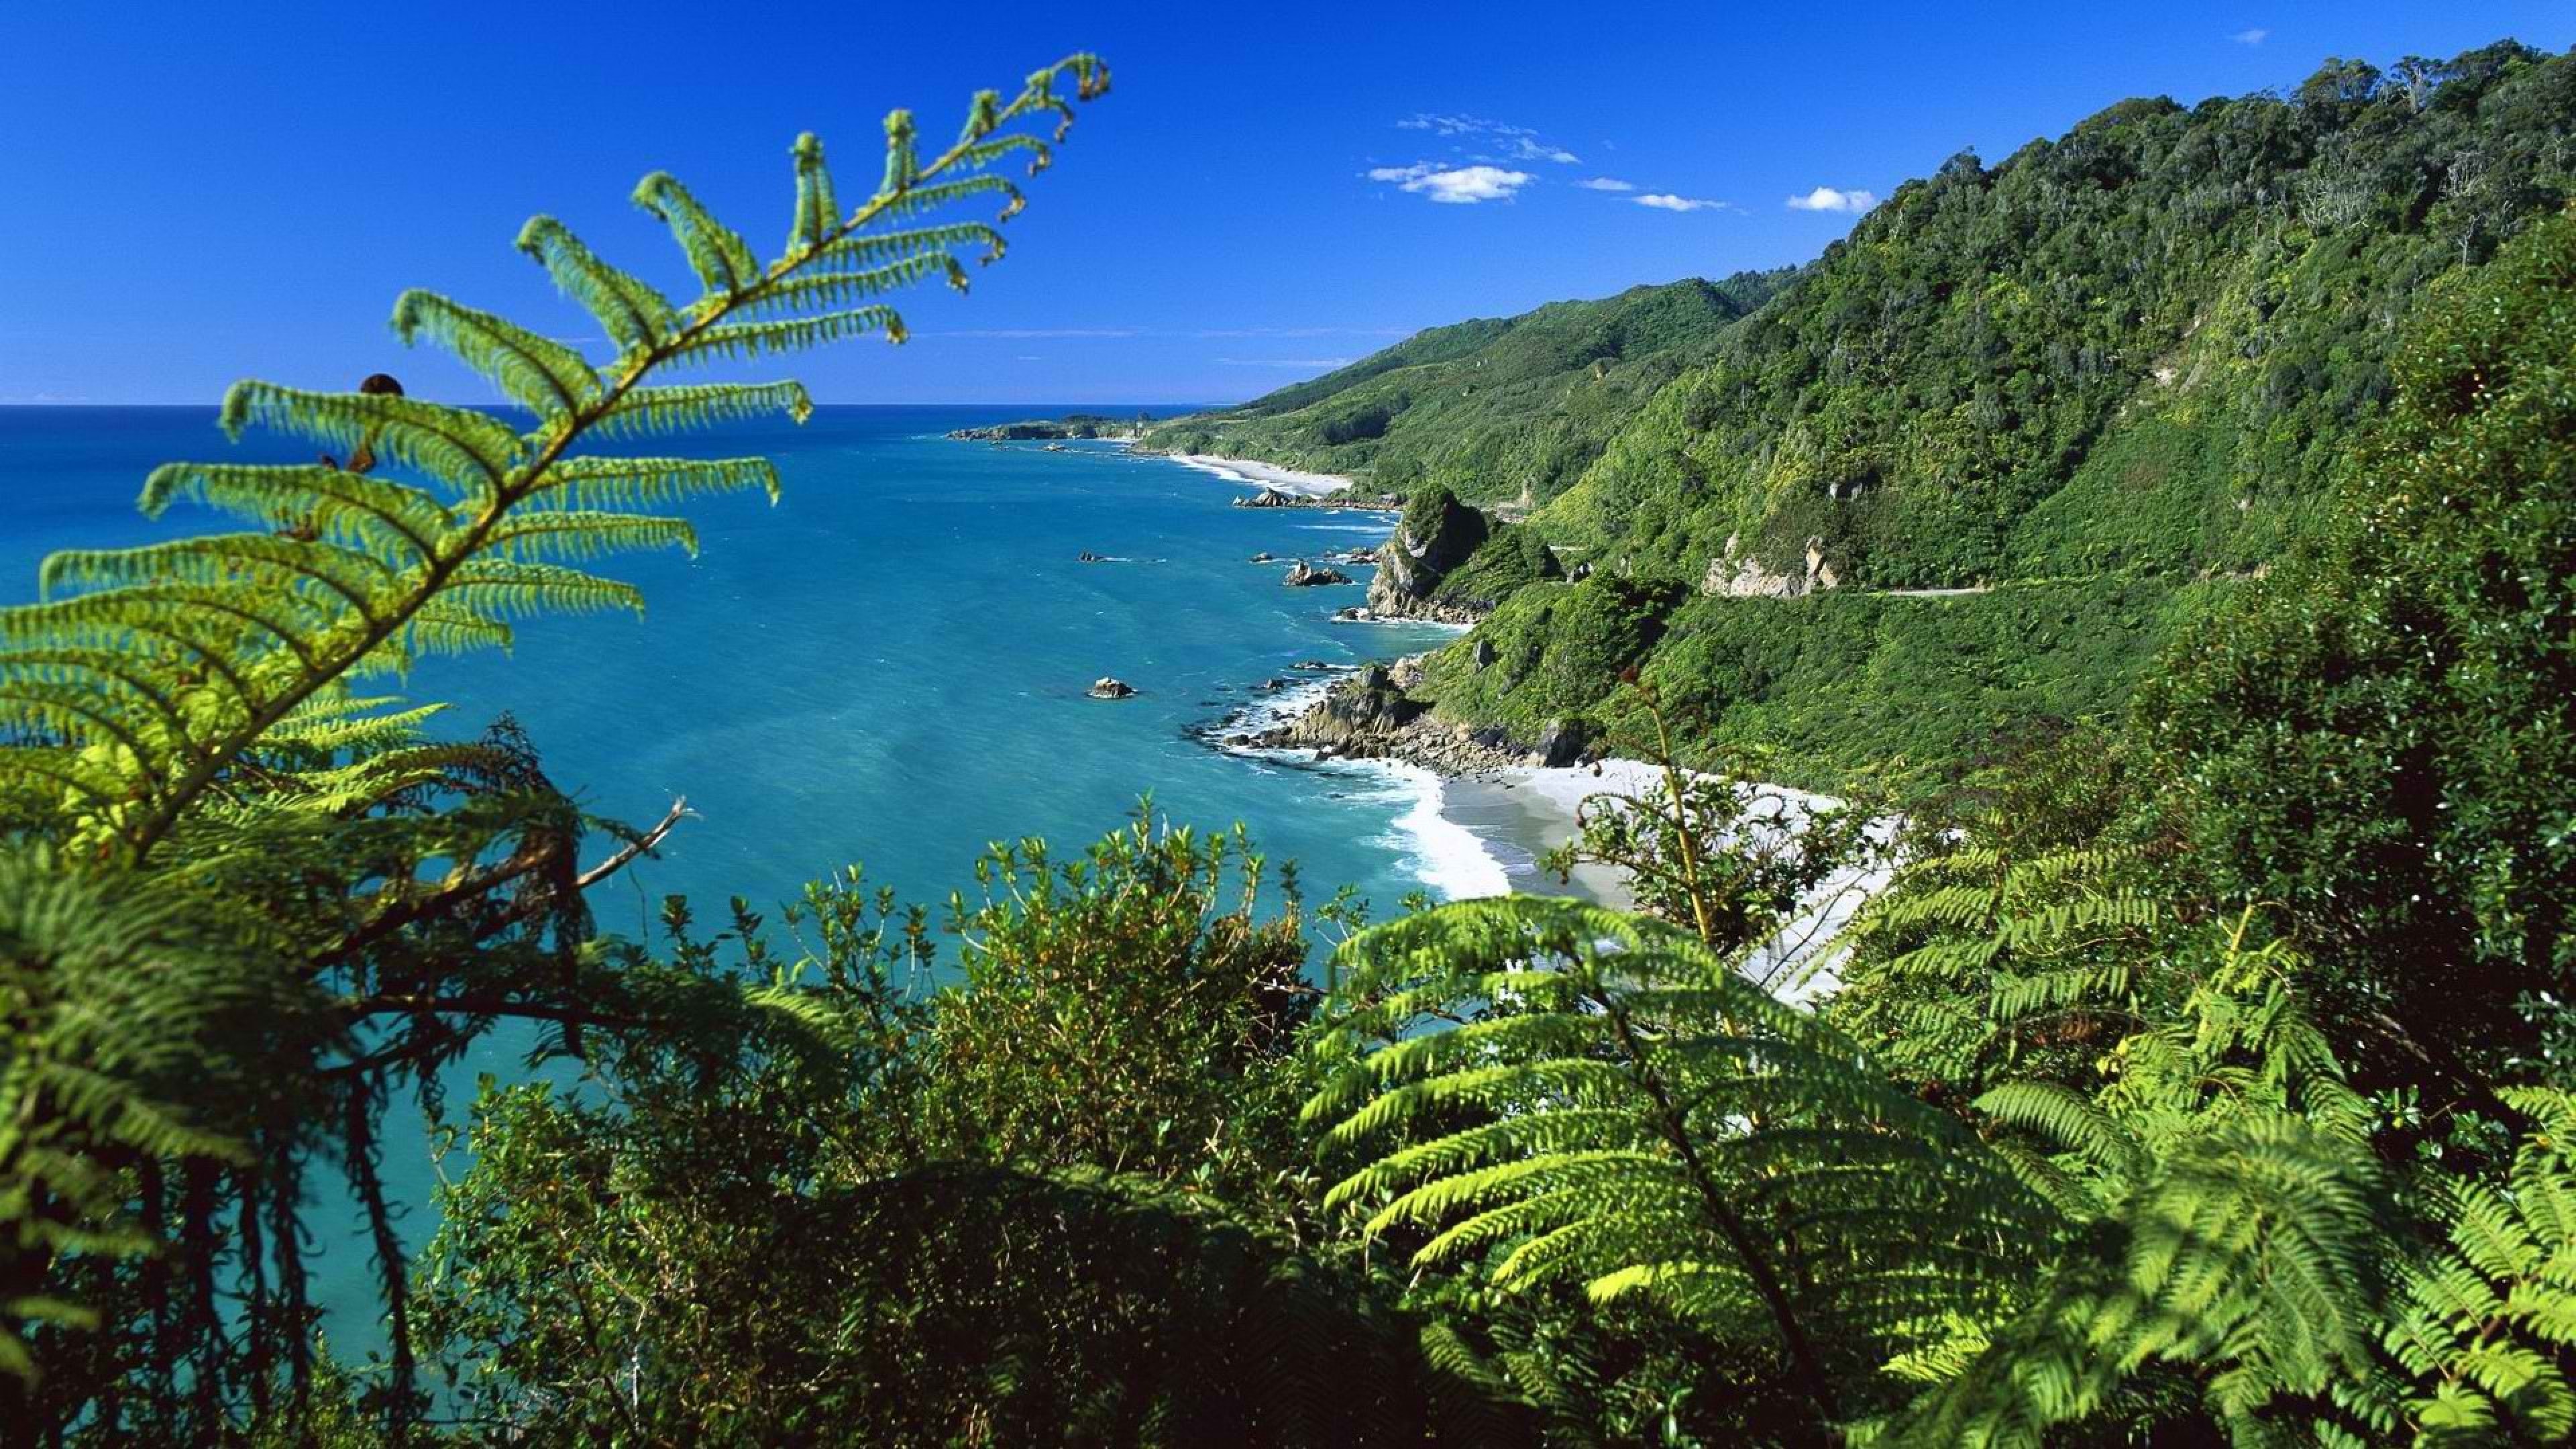 New zealand national. Национальный парк Папароа новая Зеландия. Новая Зеландия (New Zealand). Новая Зеландия Южный остров. Новая Зеландия природа Окланд.